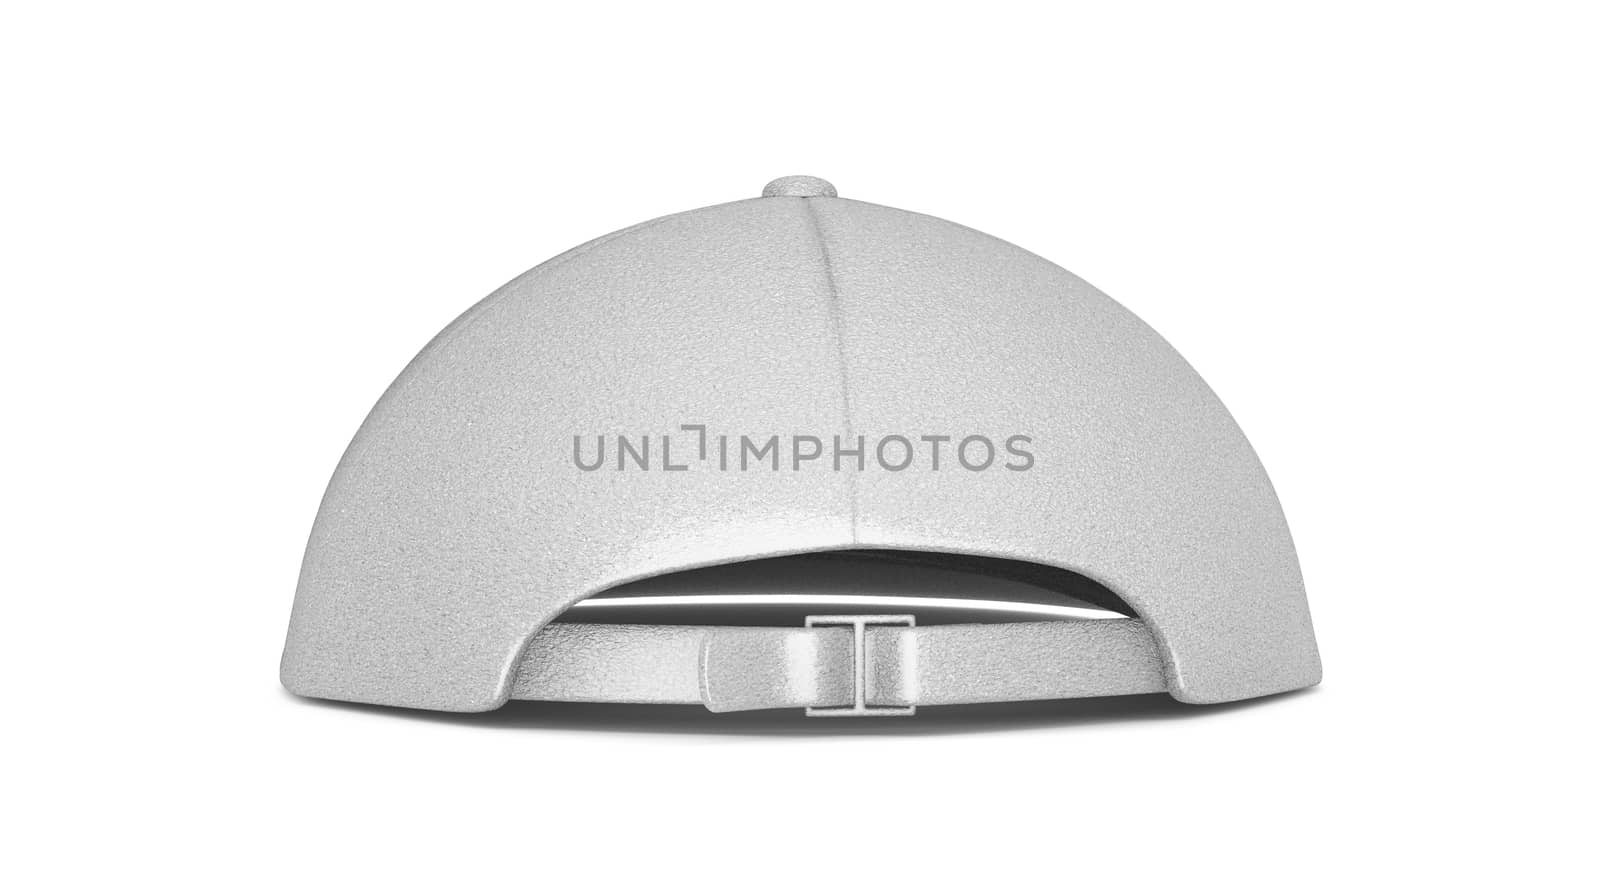 Rear view of white baseball hat by cherezoff